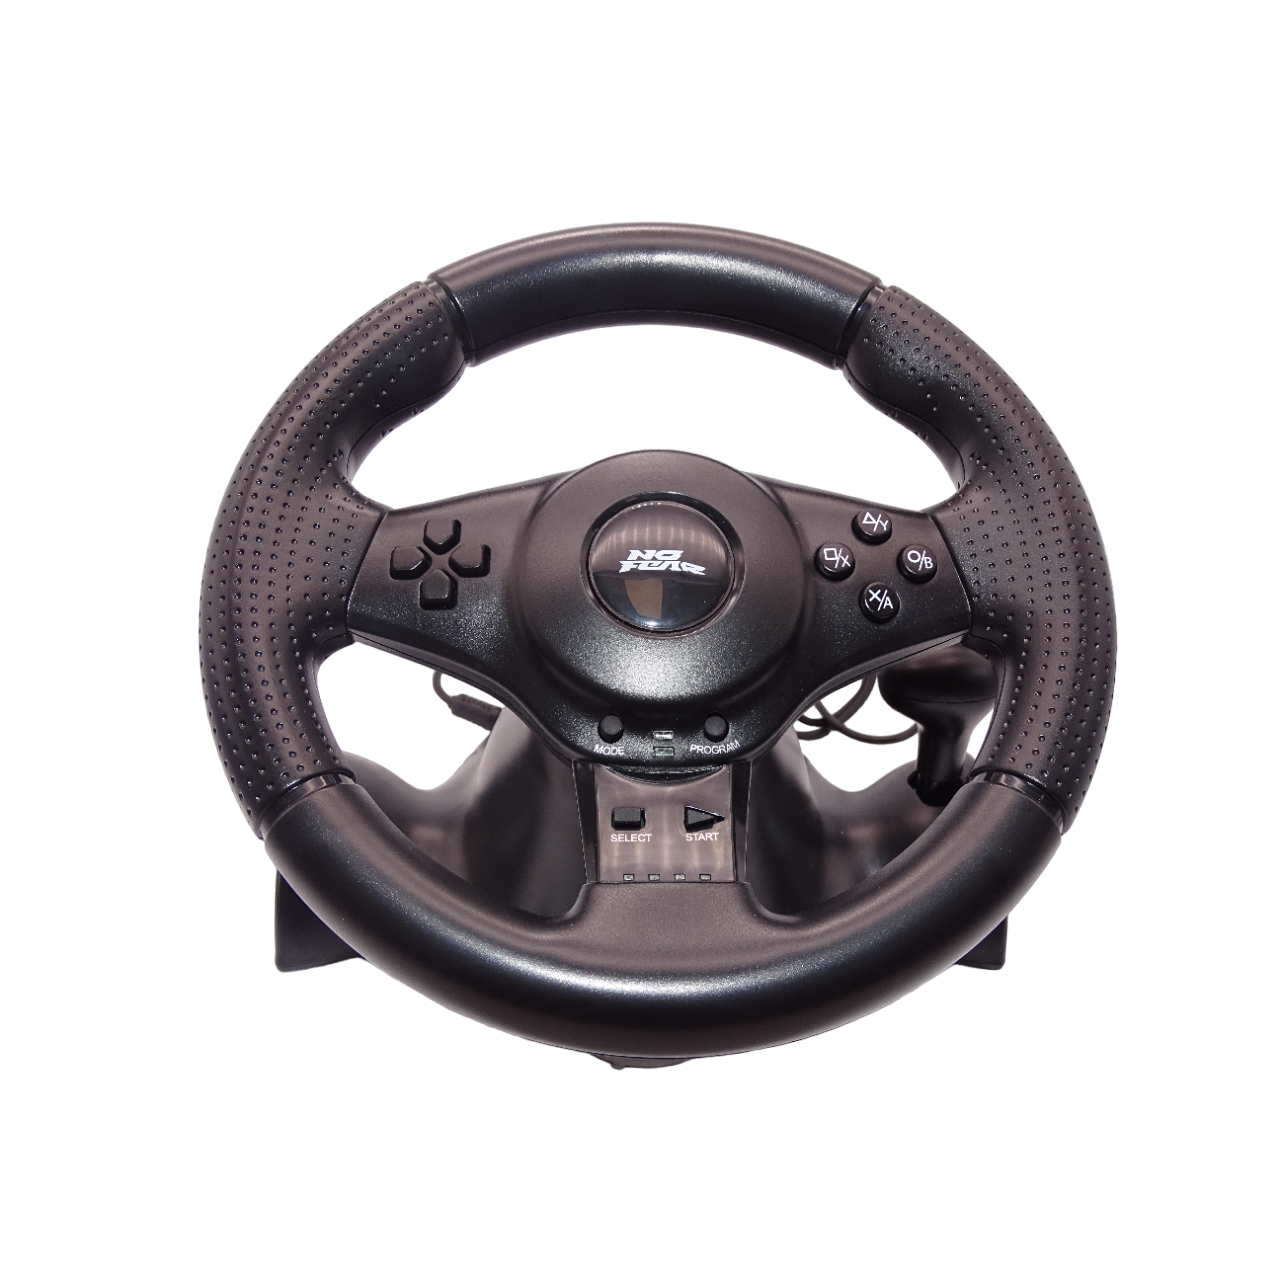 No Fear Multi-Platform Gaming Steering Wheel - Refurbished Excellent